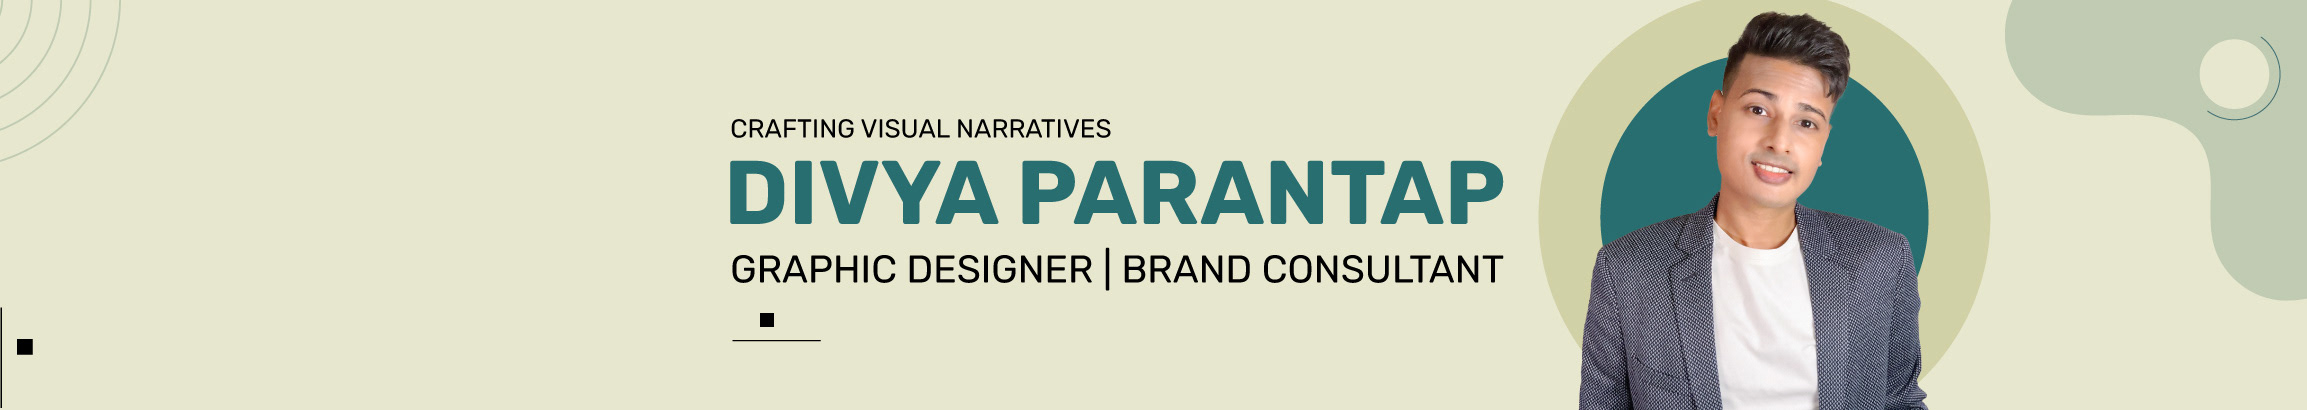 Divya Parantap's profile banner